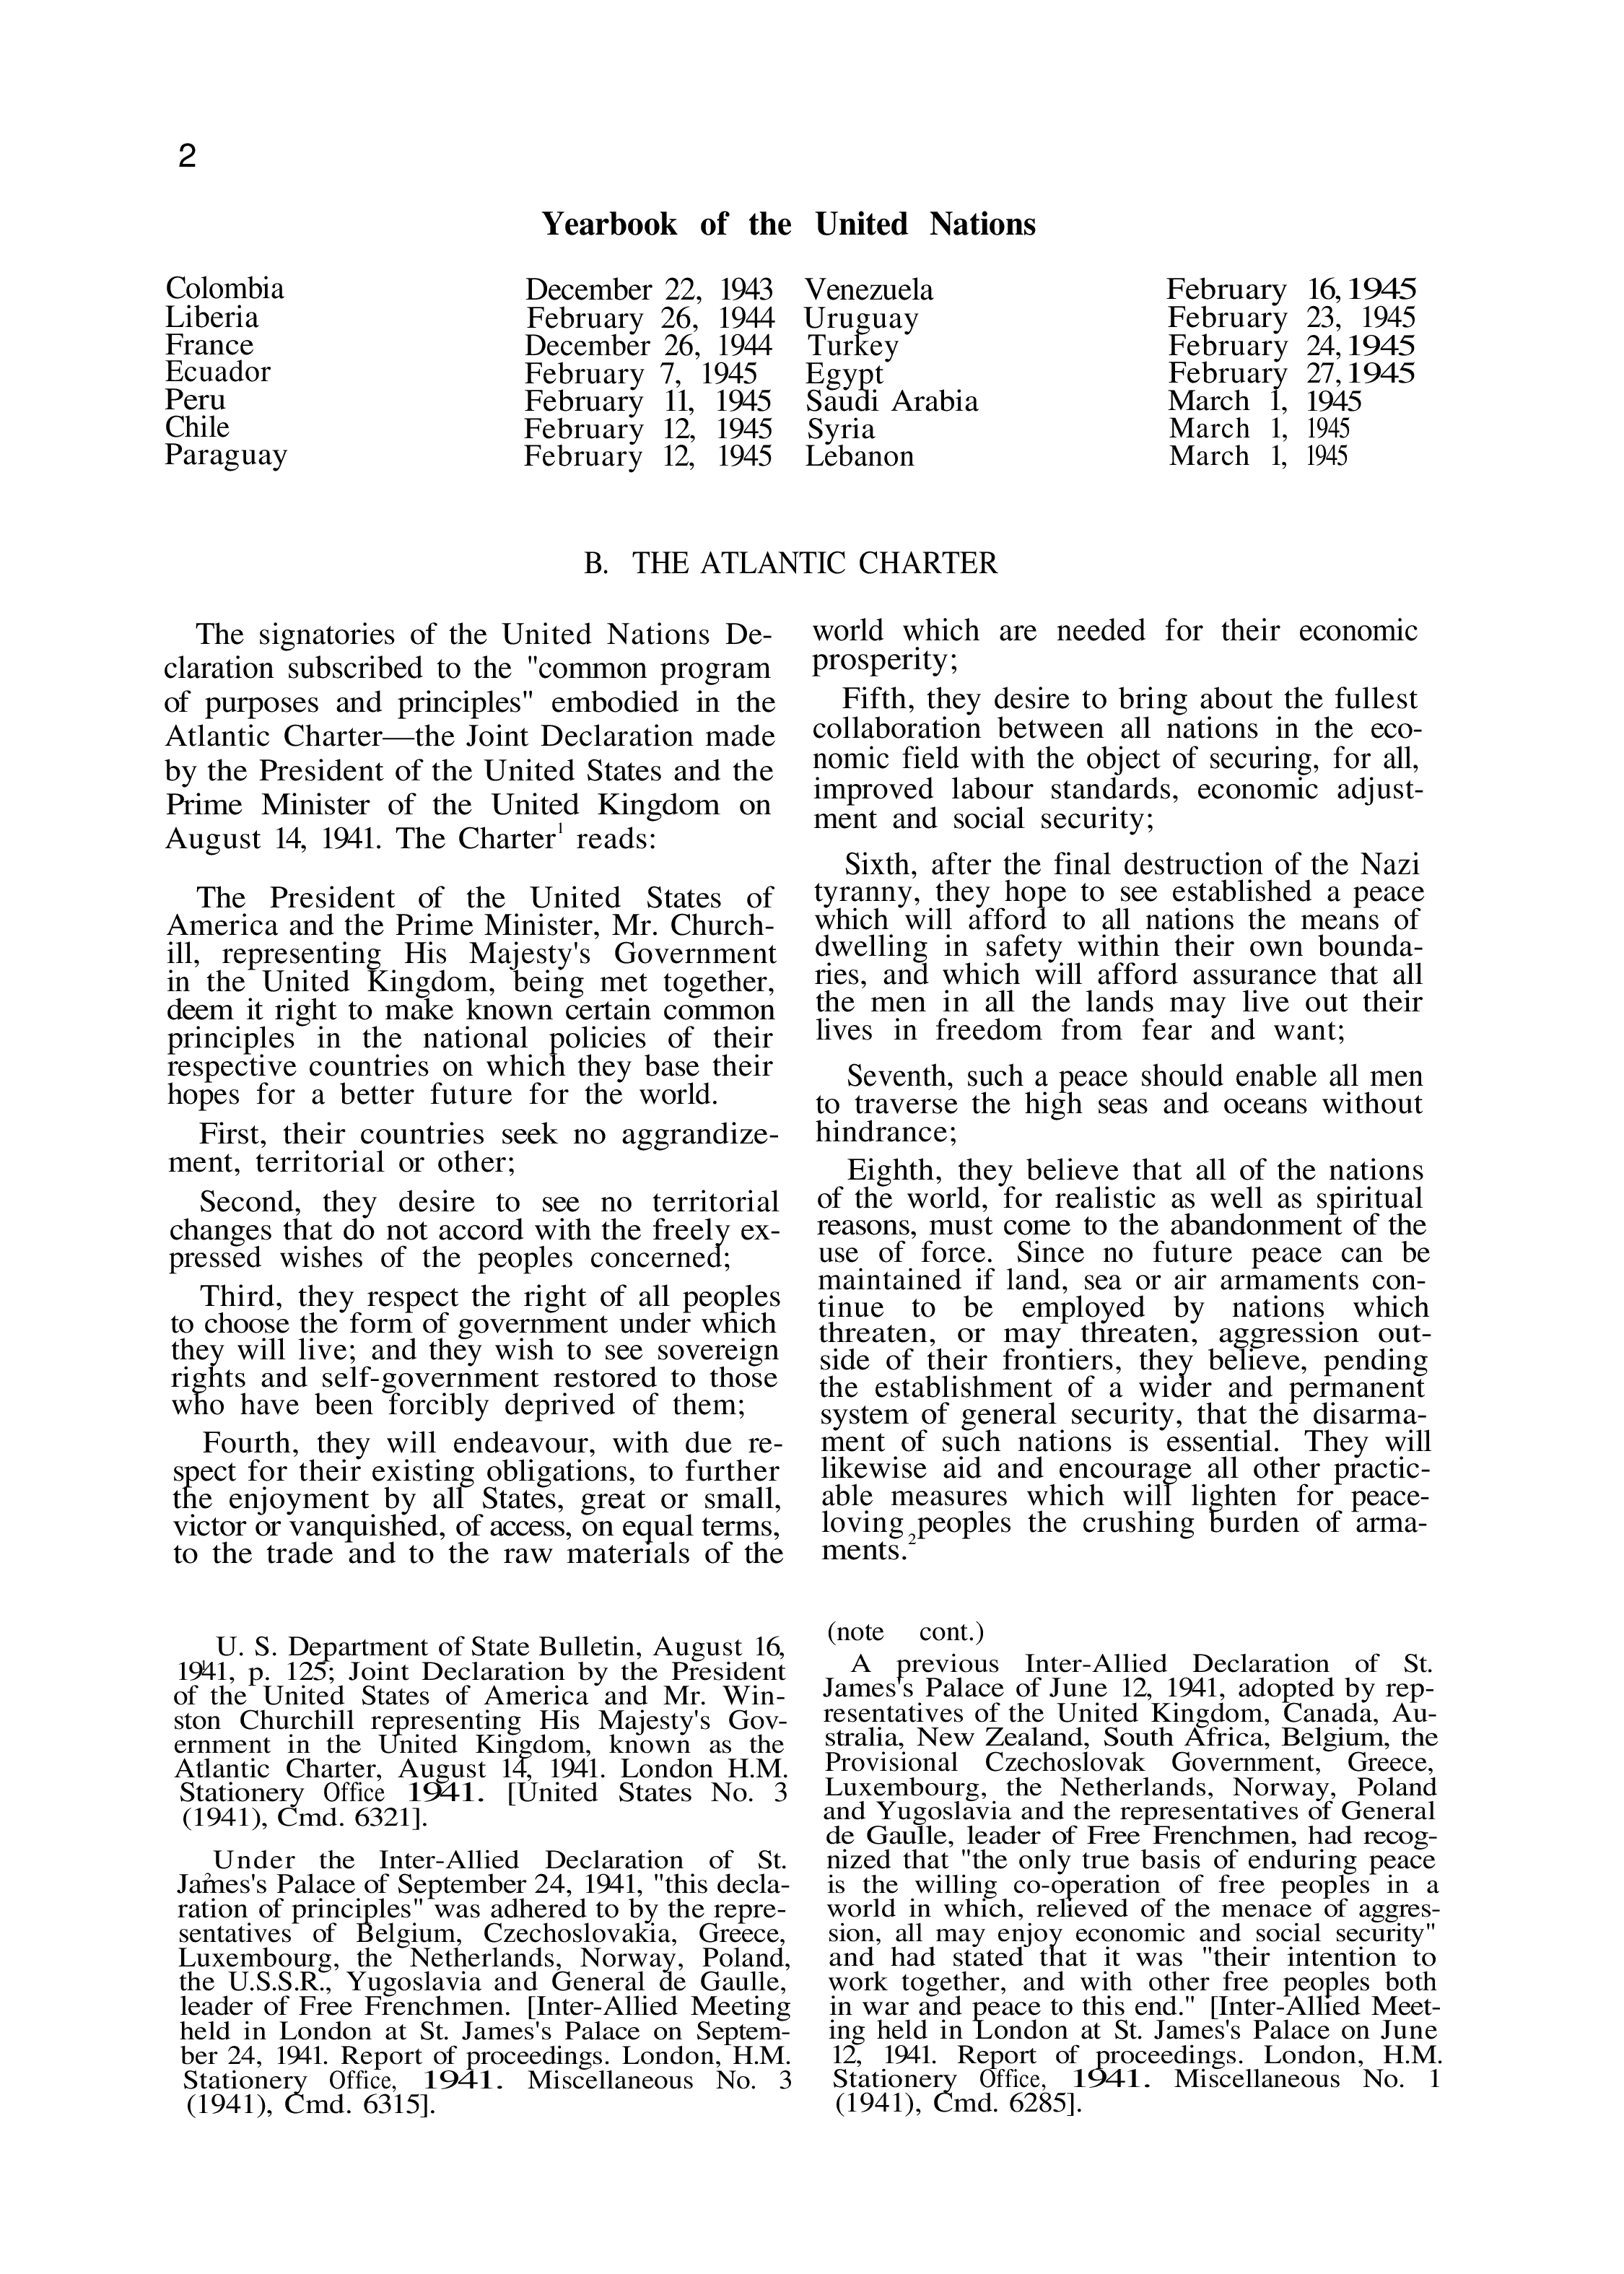 YUN Volume_Page 1946-47_37